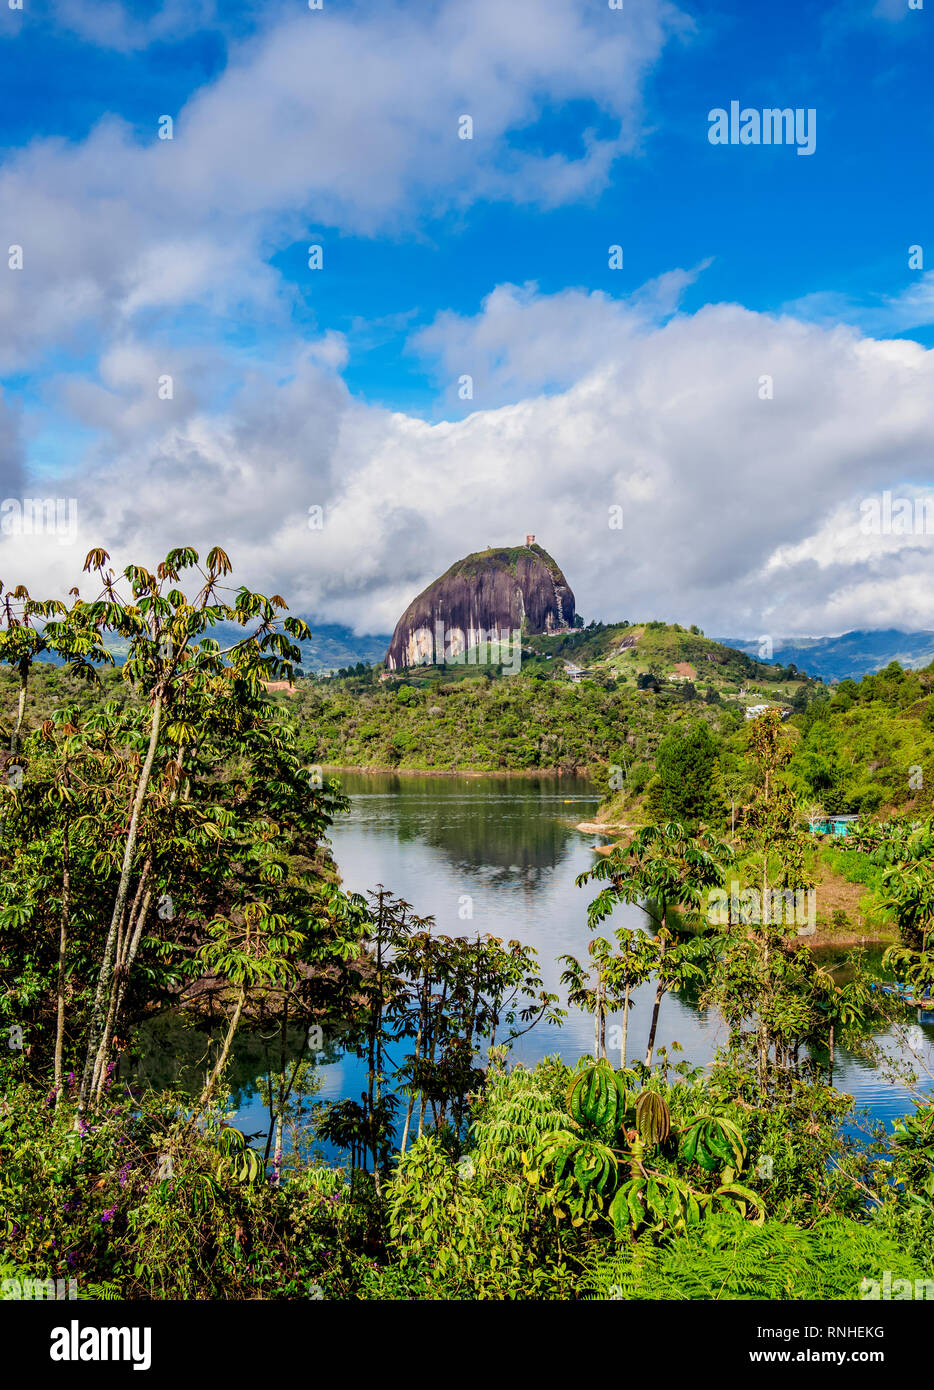 El Penon de Guatape, Rock of Guatape, Antioquia Department, Colombia Stock Photo